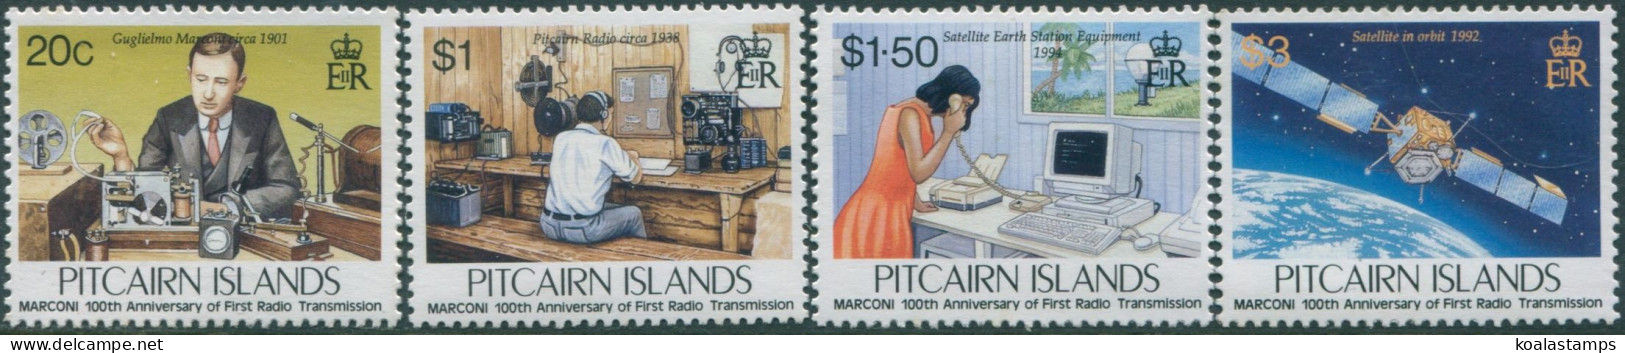 Pitcairn Islands 1995 SG479-482 First Radio Transmission Set MNH - Pitcairn Islands